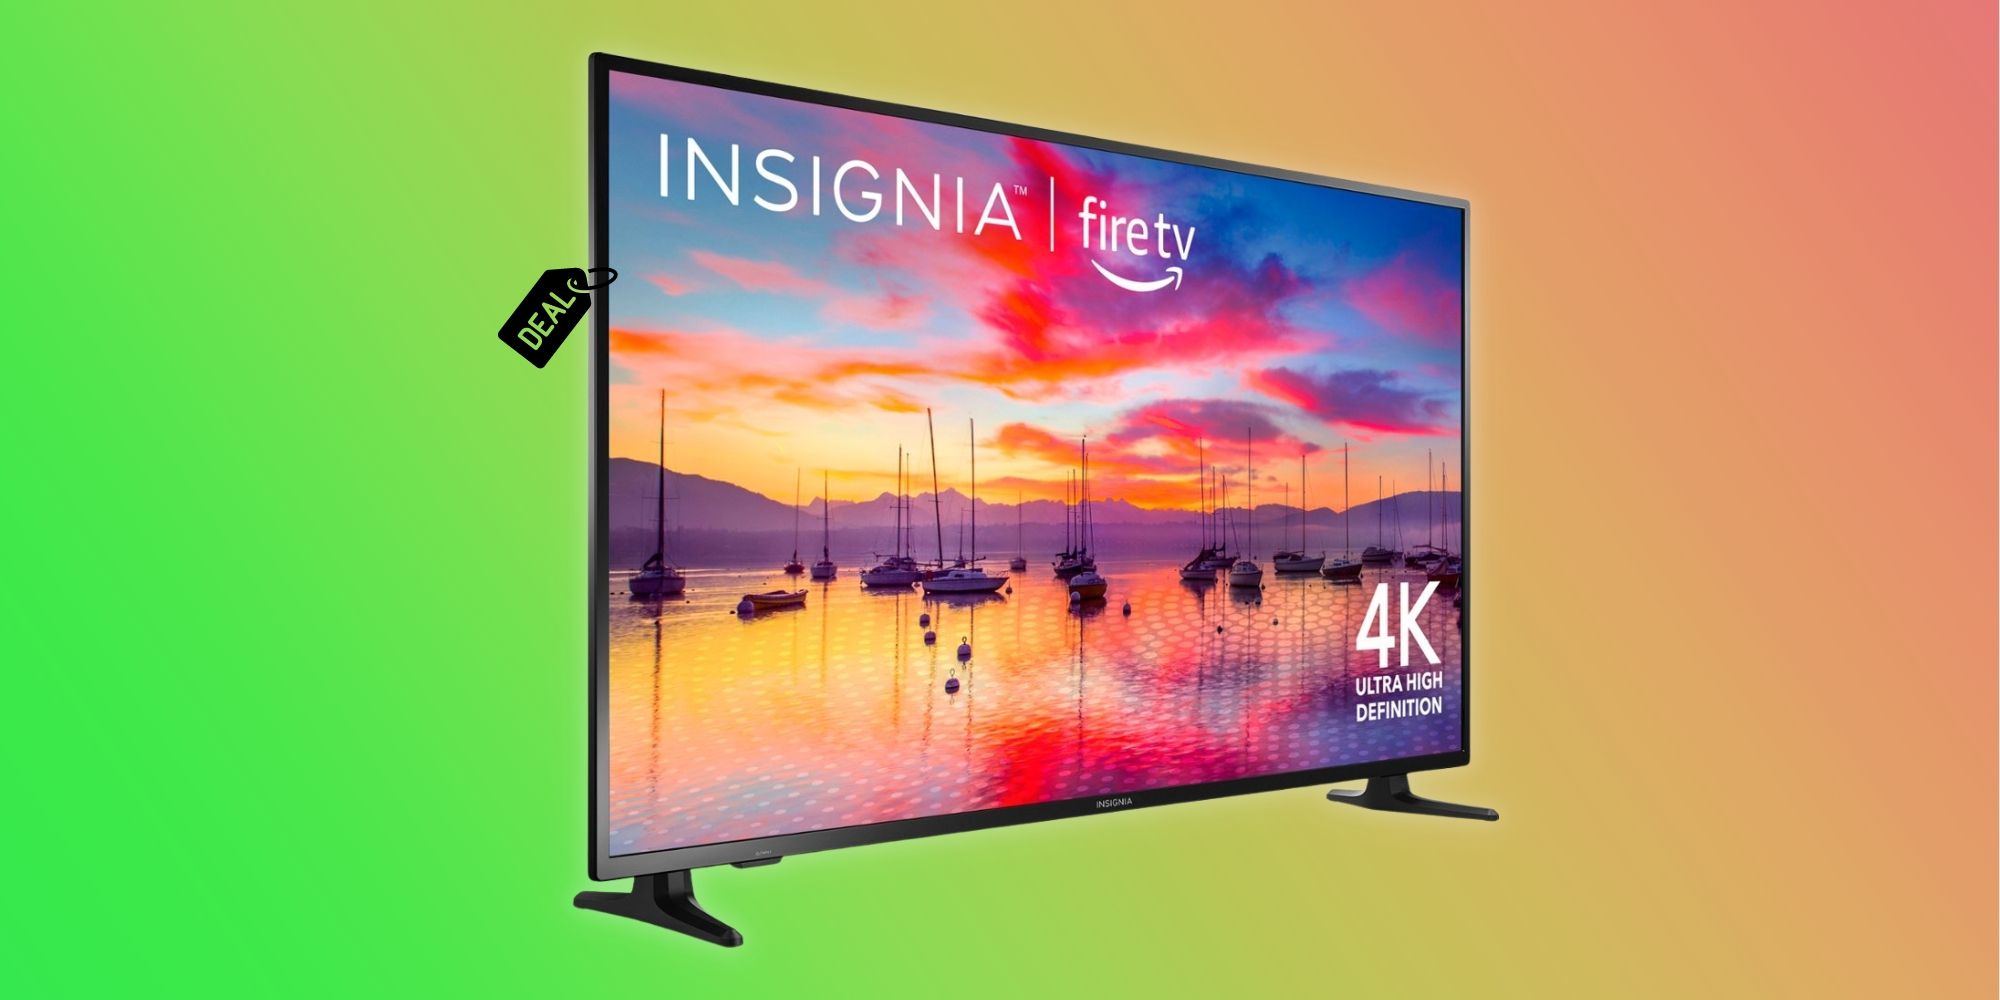 Puede obtener este televisor Insignia 4K Fire de 55 pulgadas por menos de $ 300 hoy